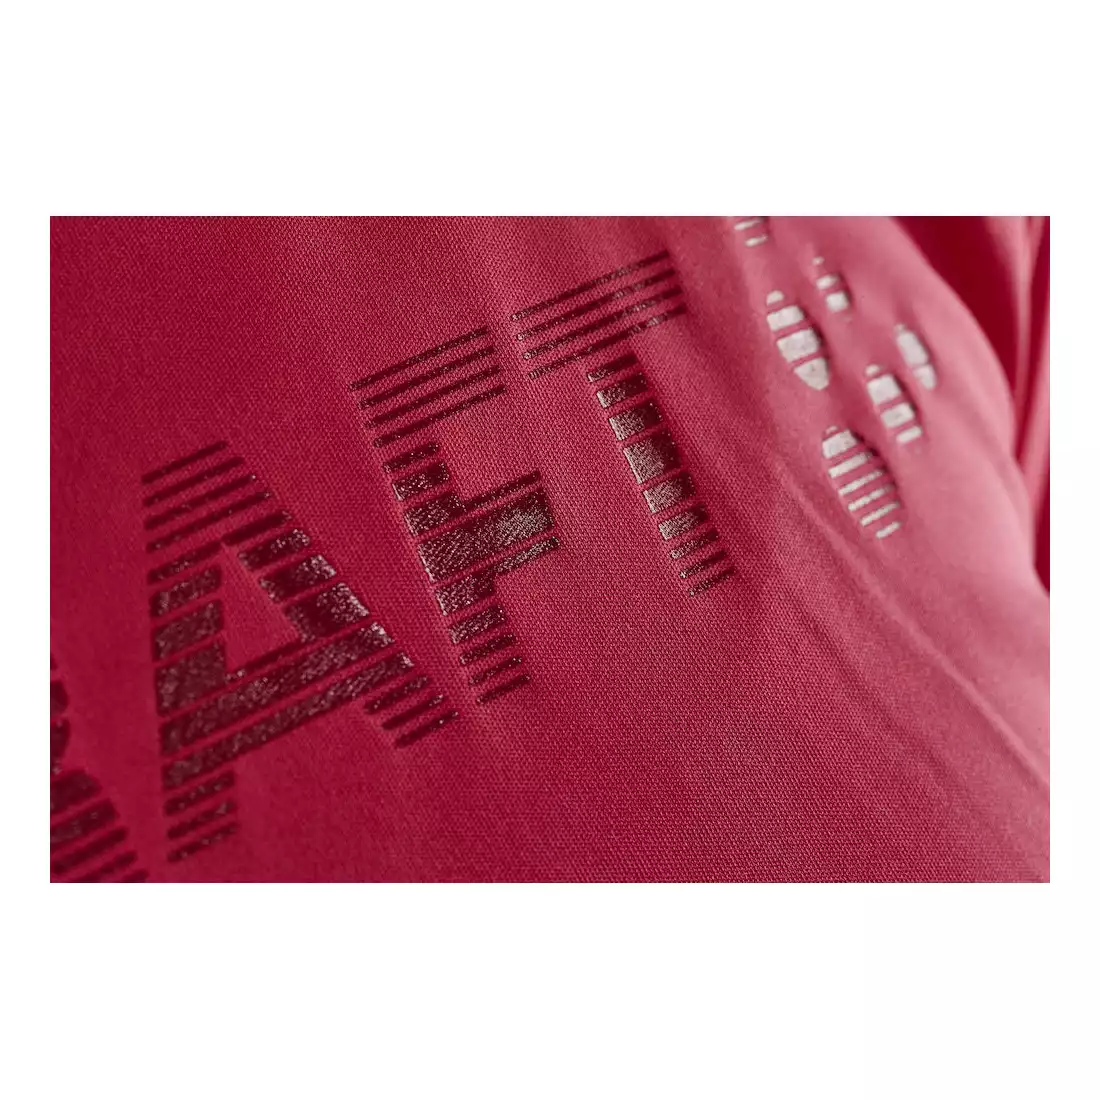 CRAFT Prime Logo 1904342 -1411 damska koszulka do biegania